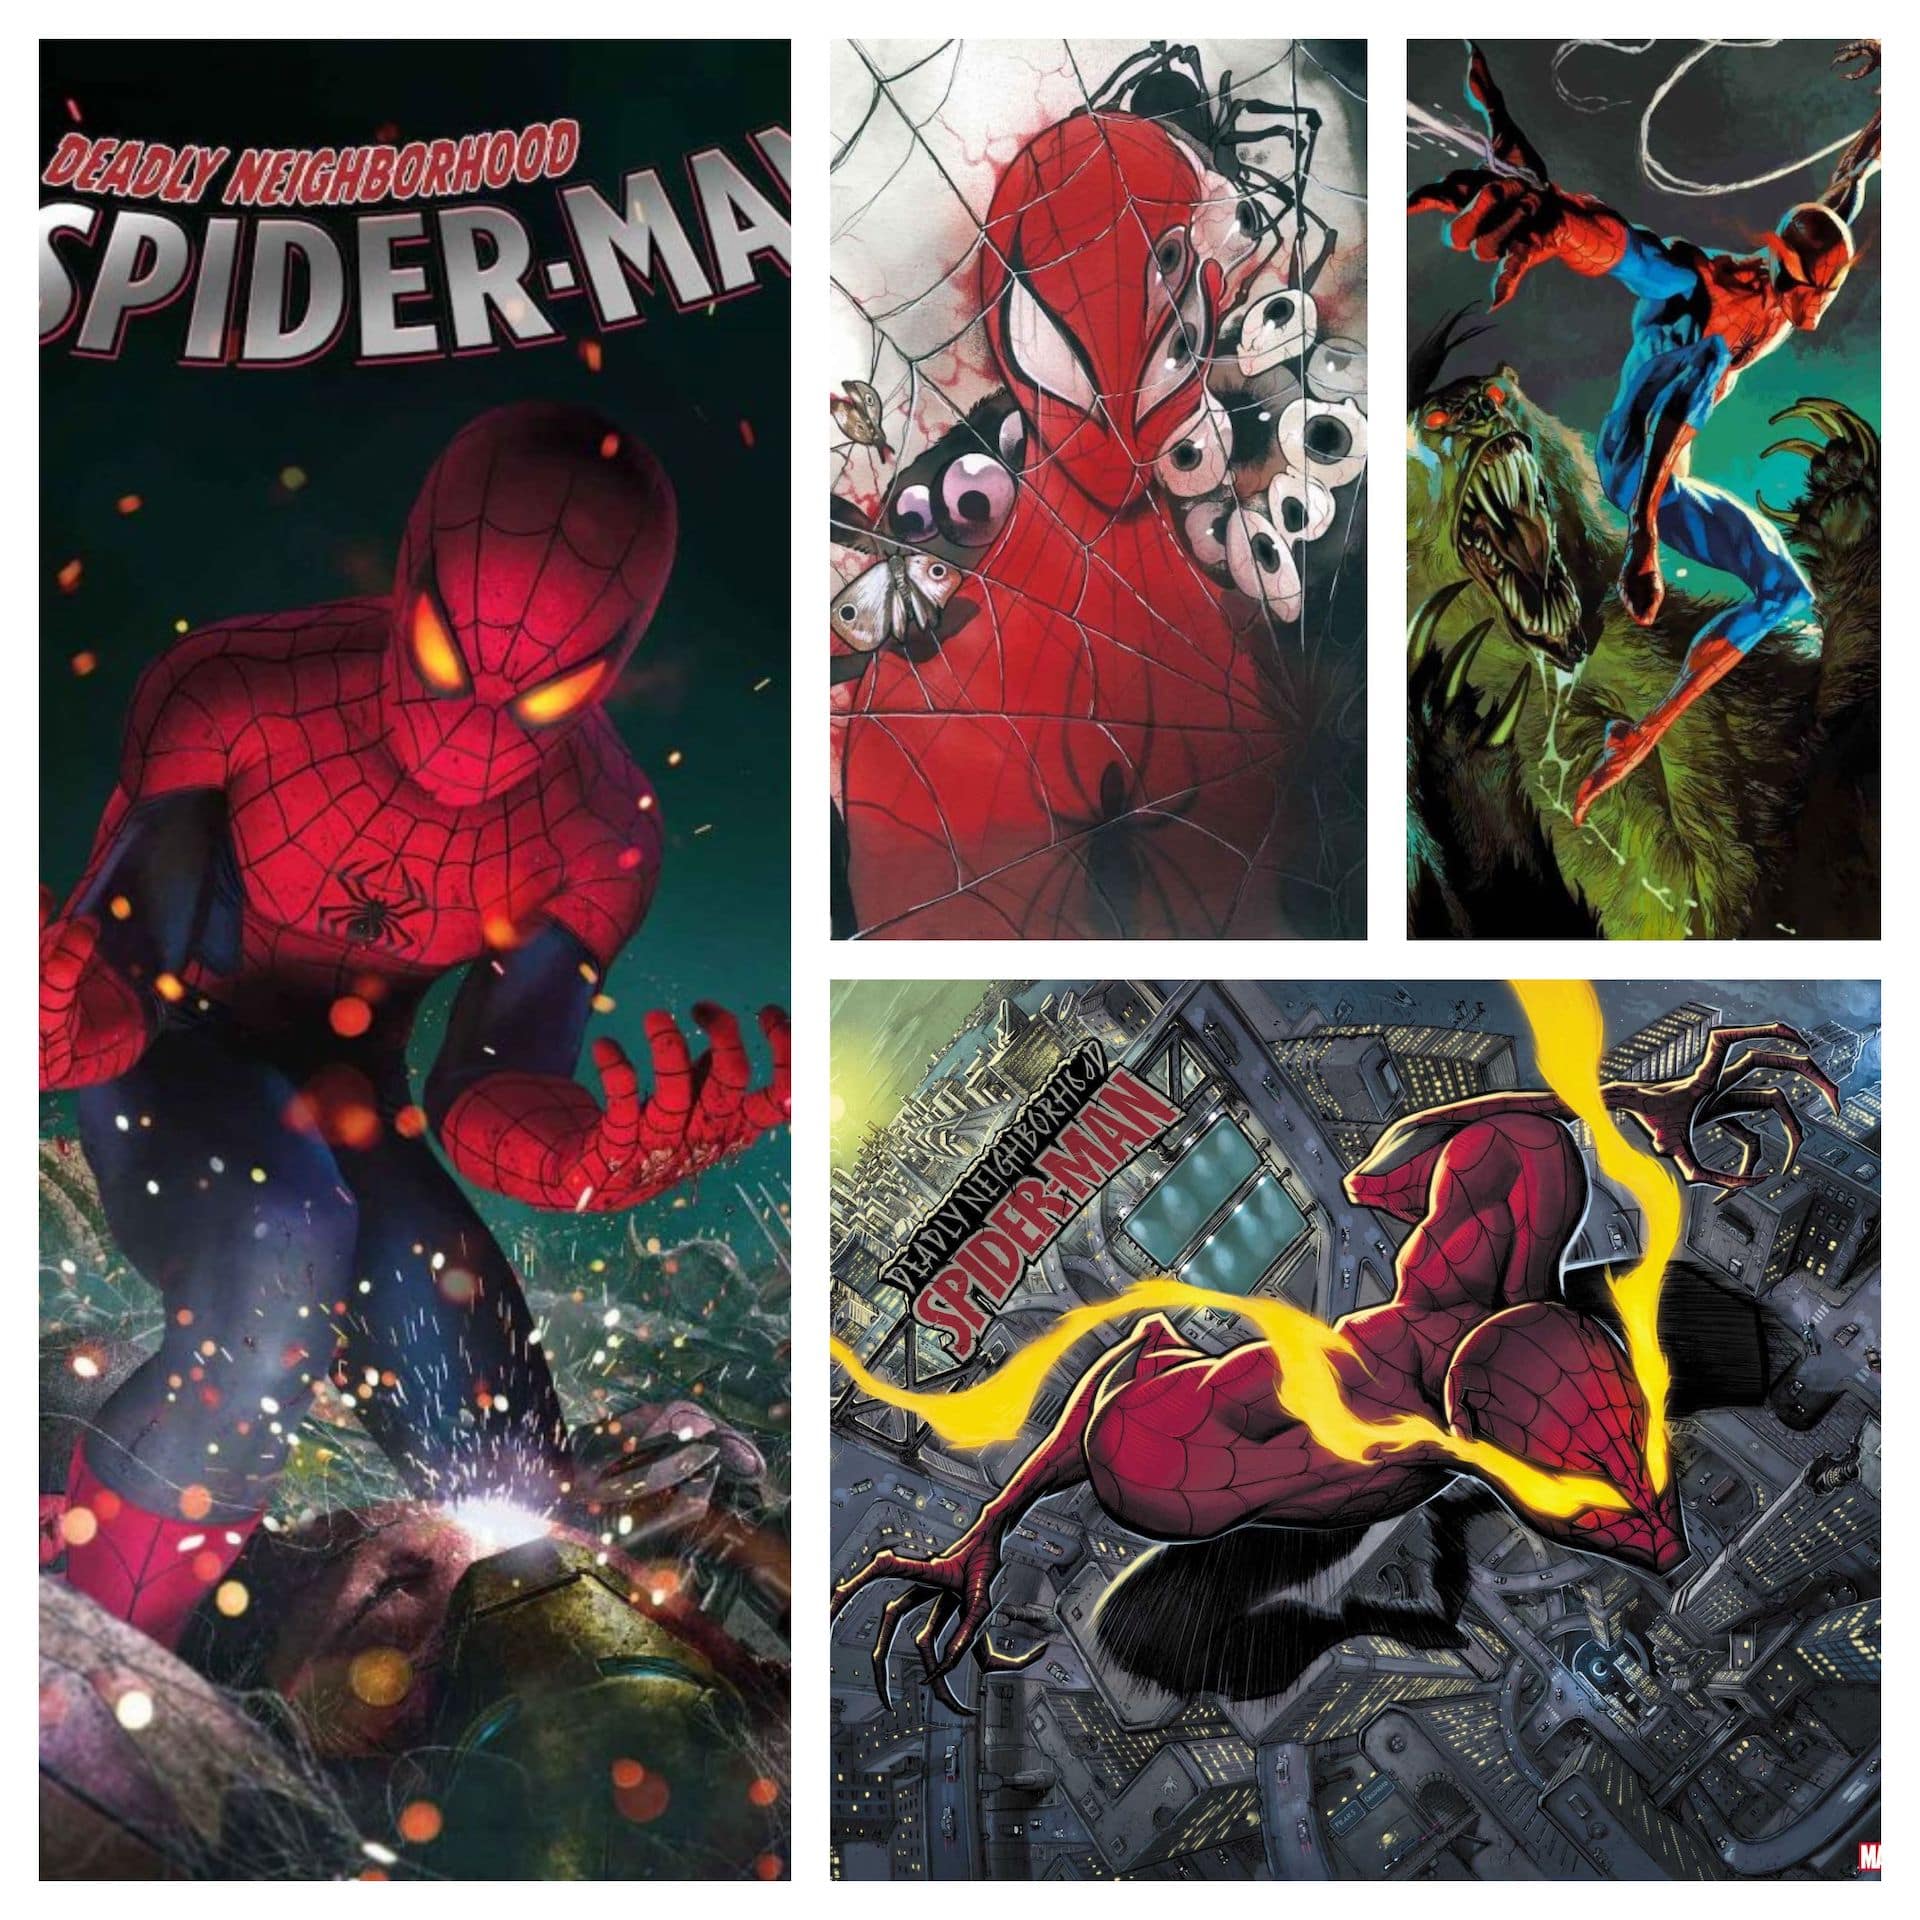 Marvel First Look: Deadly Neighborhood Spider-Man #1